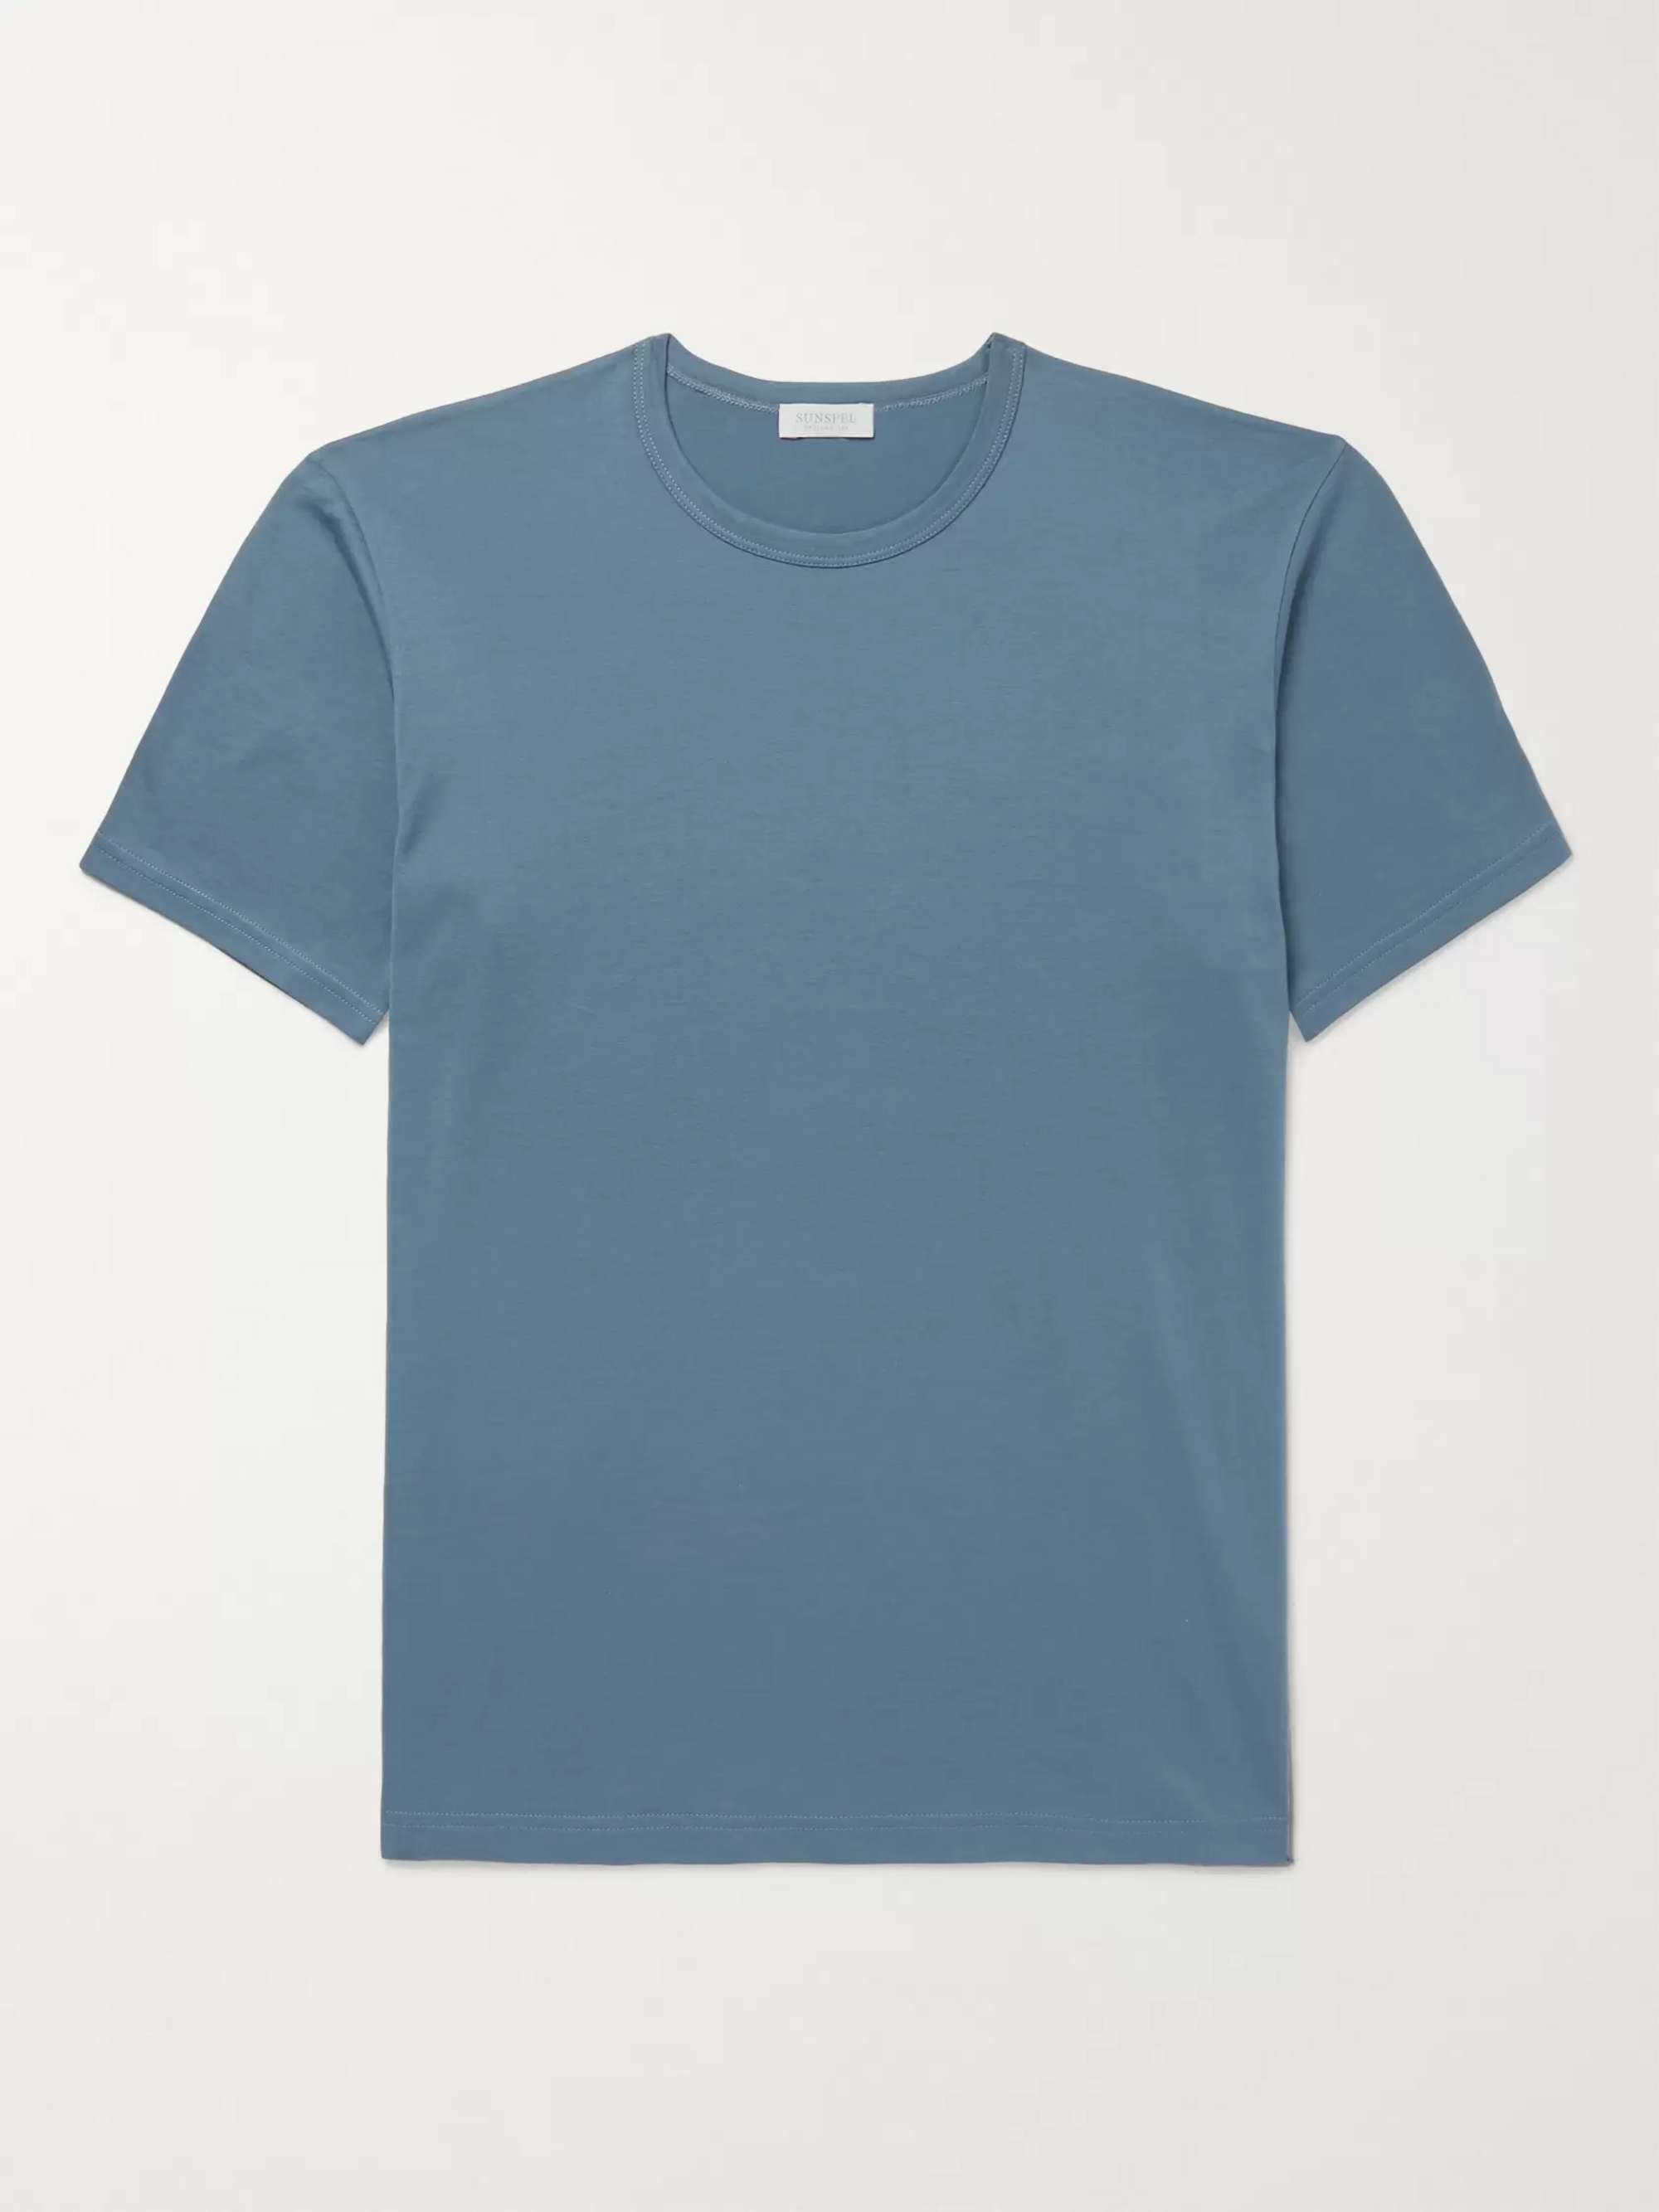 SUNSPEL Slim-Fit Cotton-Jersey T-Shirt